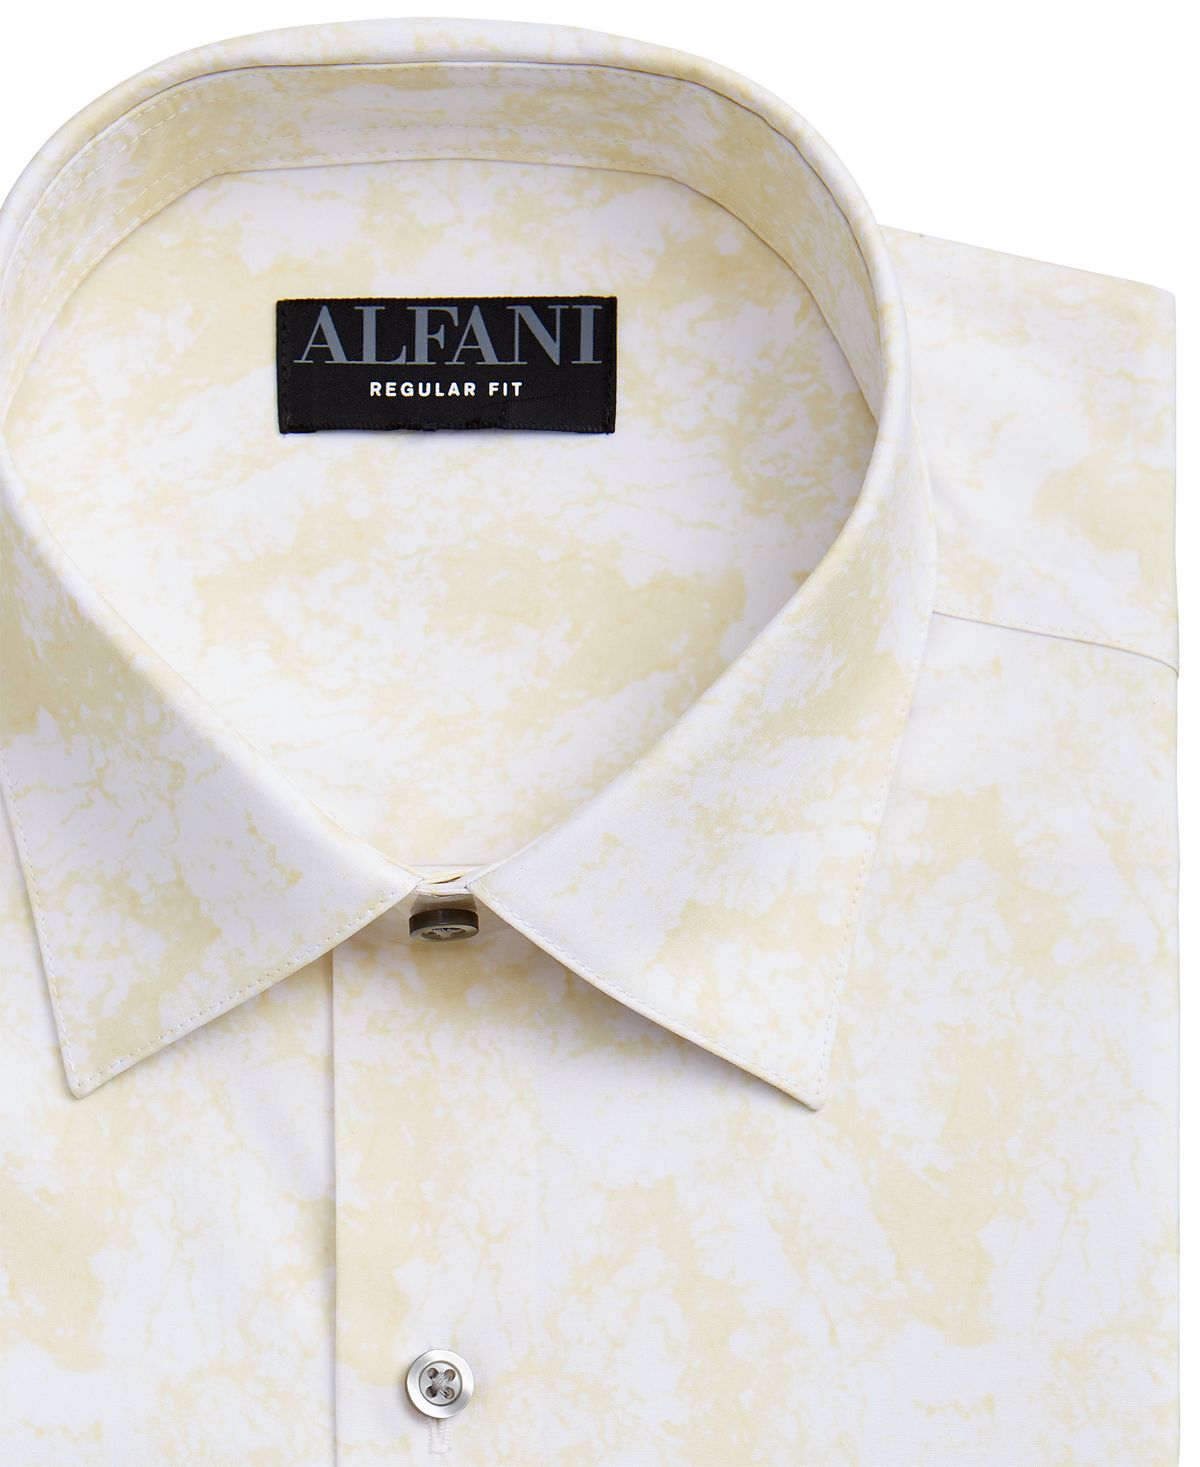 Alfani Regular Fit 2-way Stretch Performance Dress Shirt White Yellow